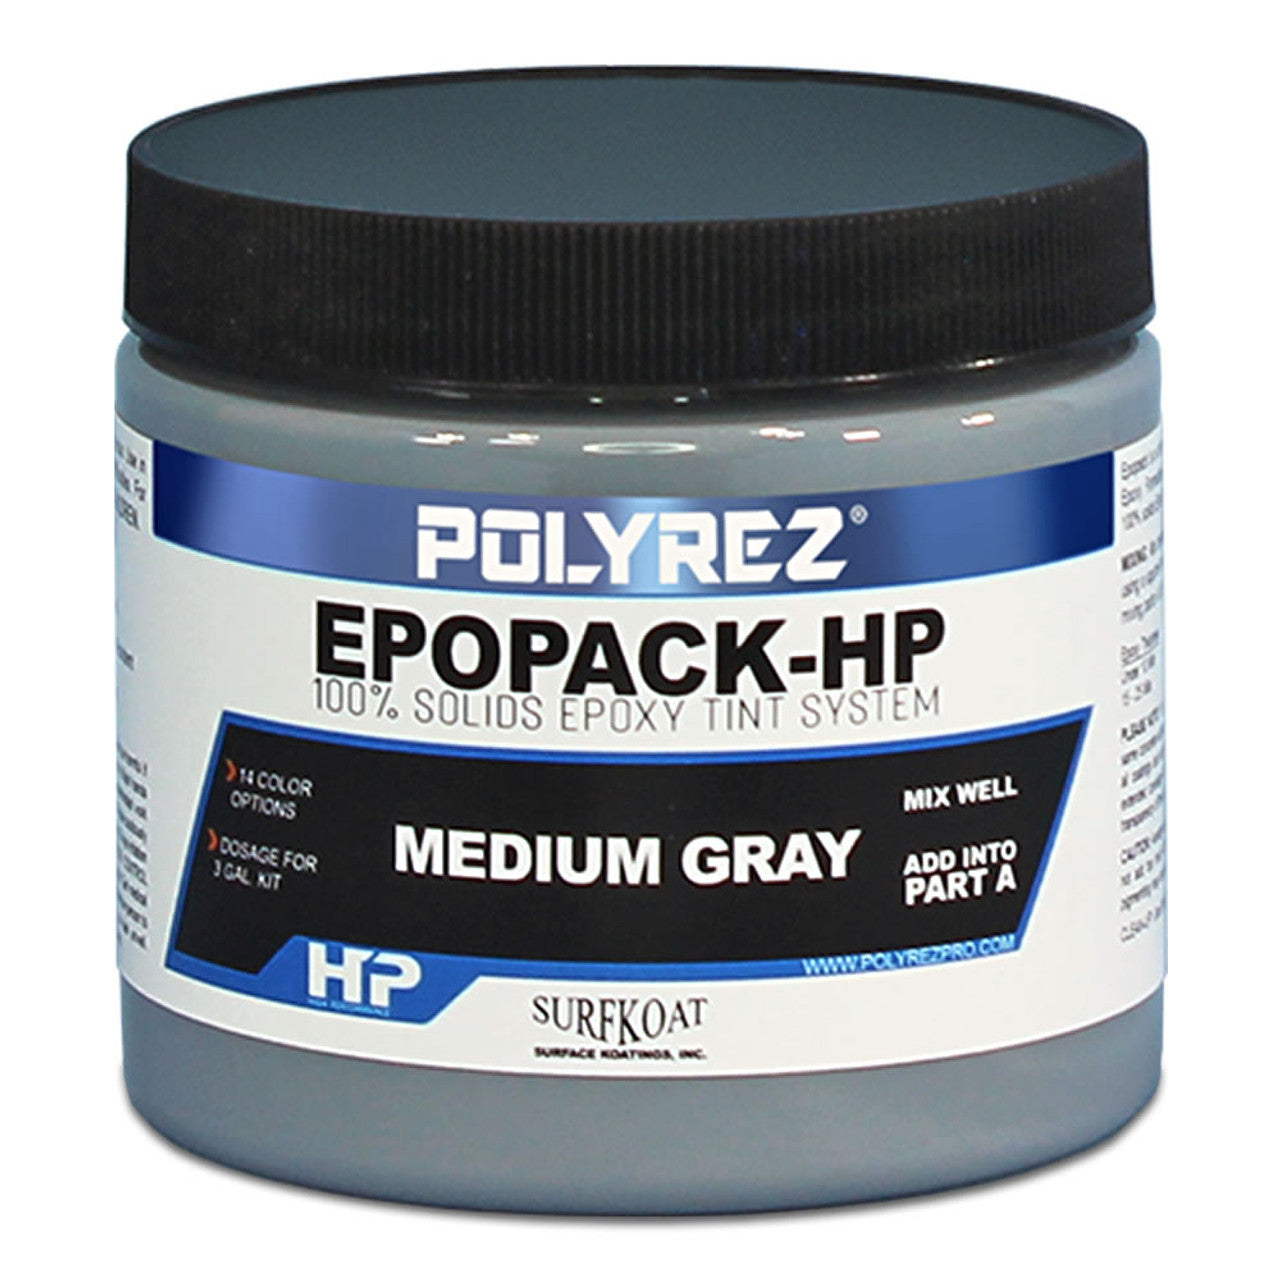 Epopack-HP (Canyon Clay) 1 Pint